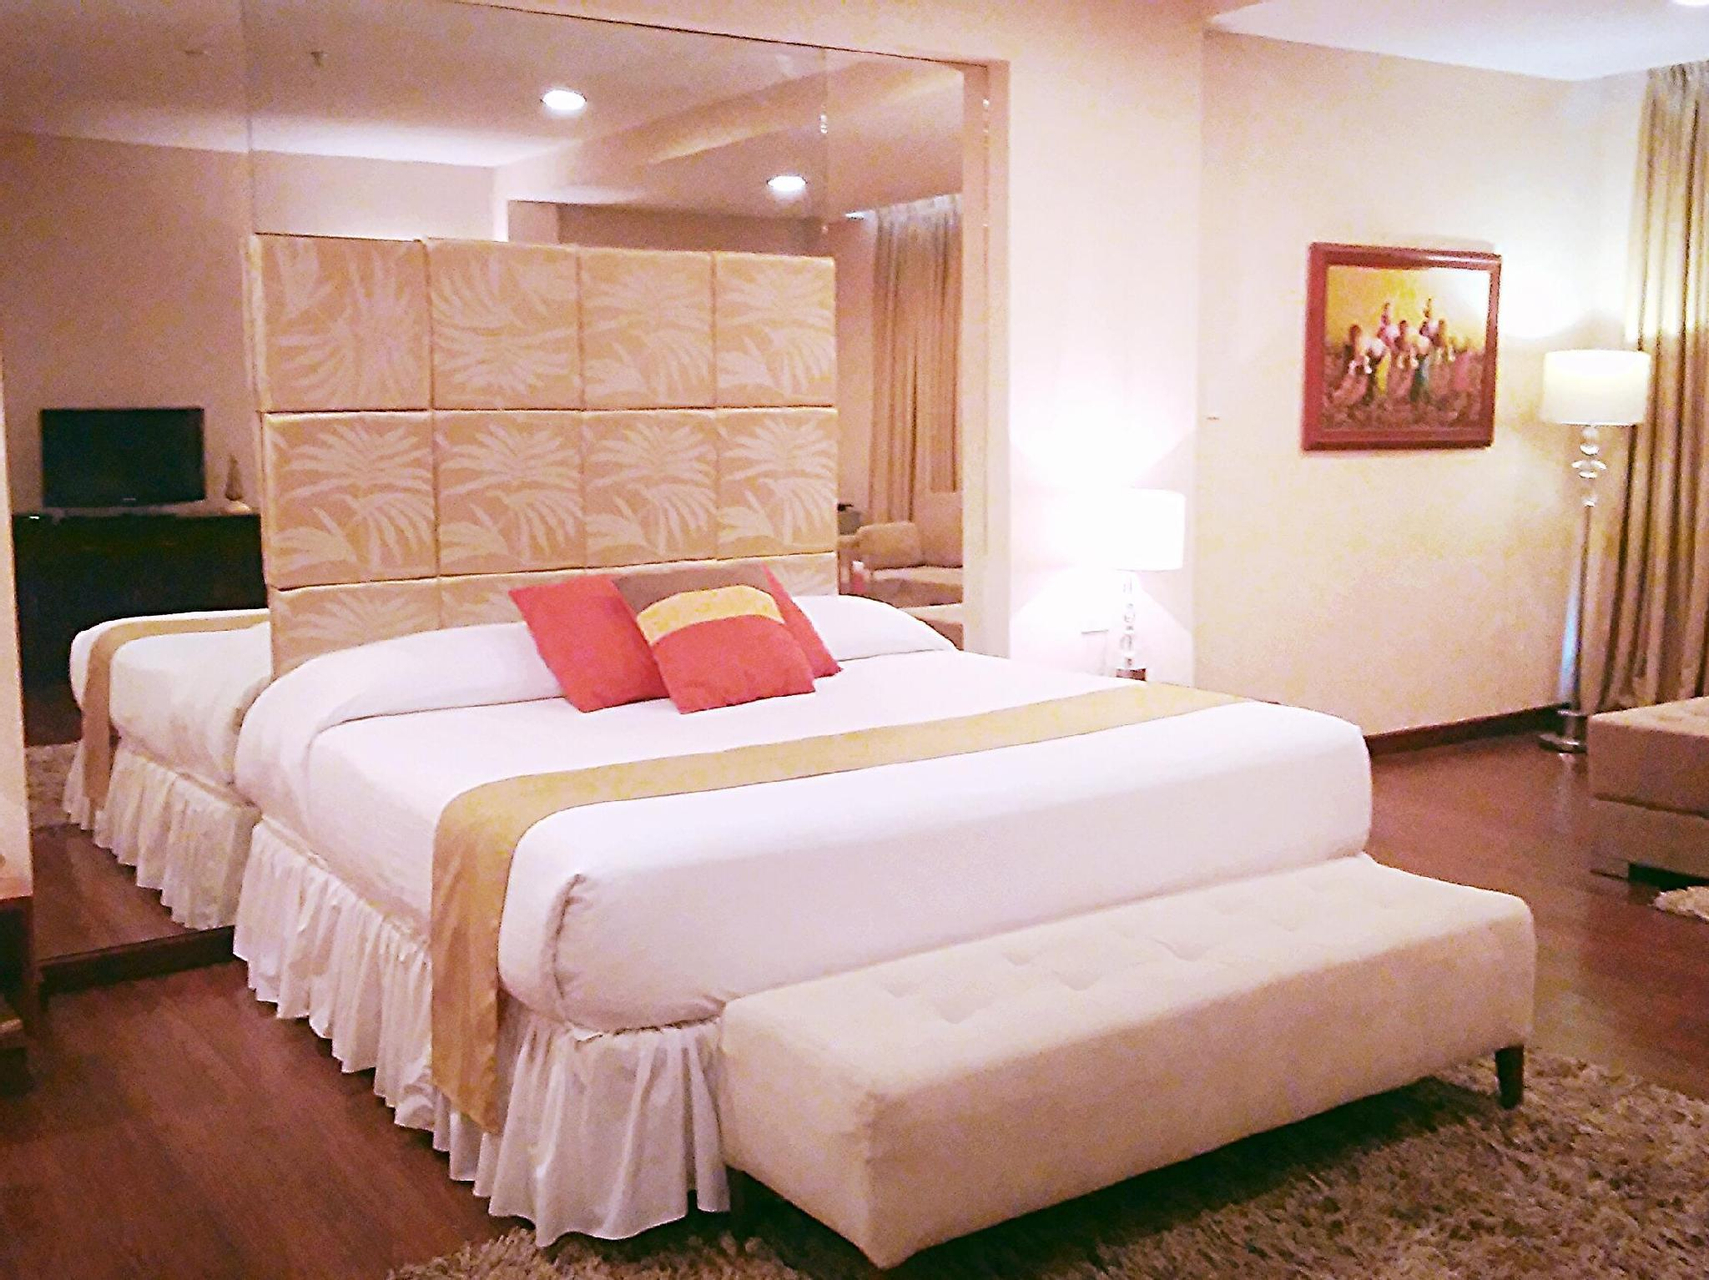 Bedroom, People's Hotel, Iloilo City